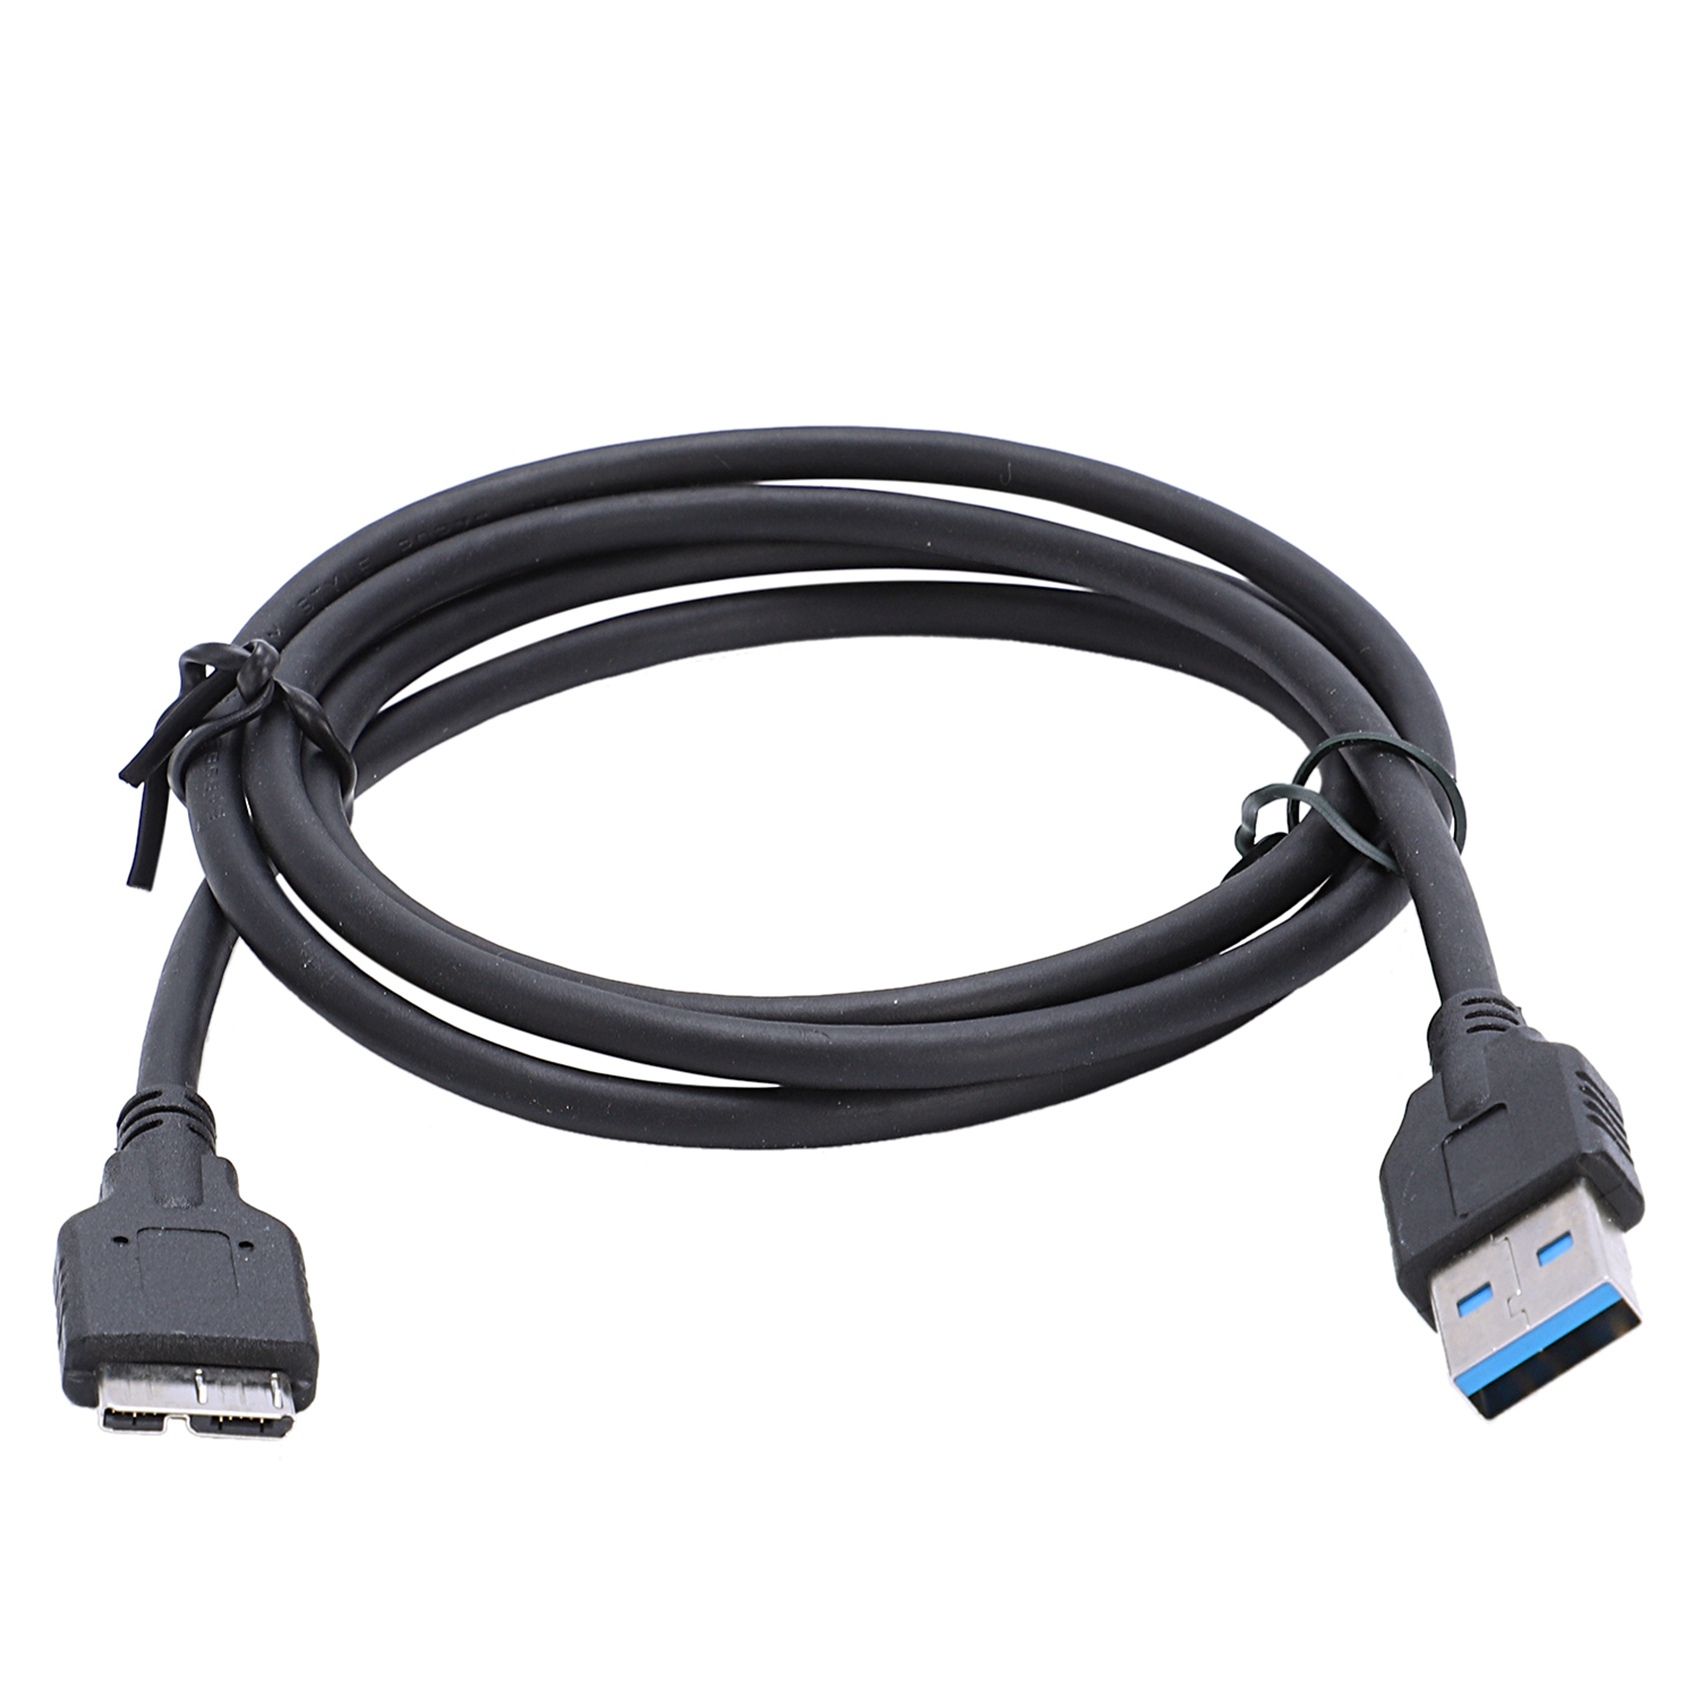 Usb 3.0 кабель питанием. Кабель юсб 3.0 для жесткого диска. USB шнур для Тошиба dtb310. Кабель для USB кабель USB для жесткого диска WD. Кабель для жёсткого диска USB 3.0 Toshiba.